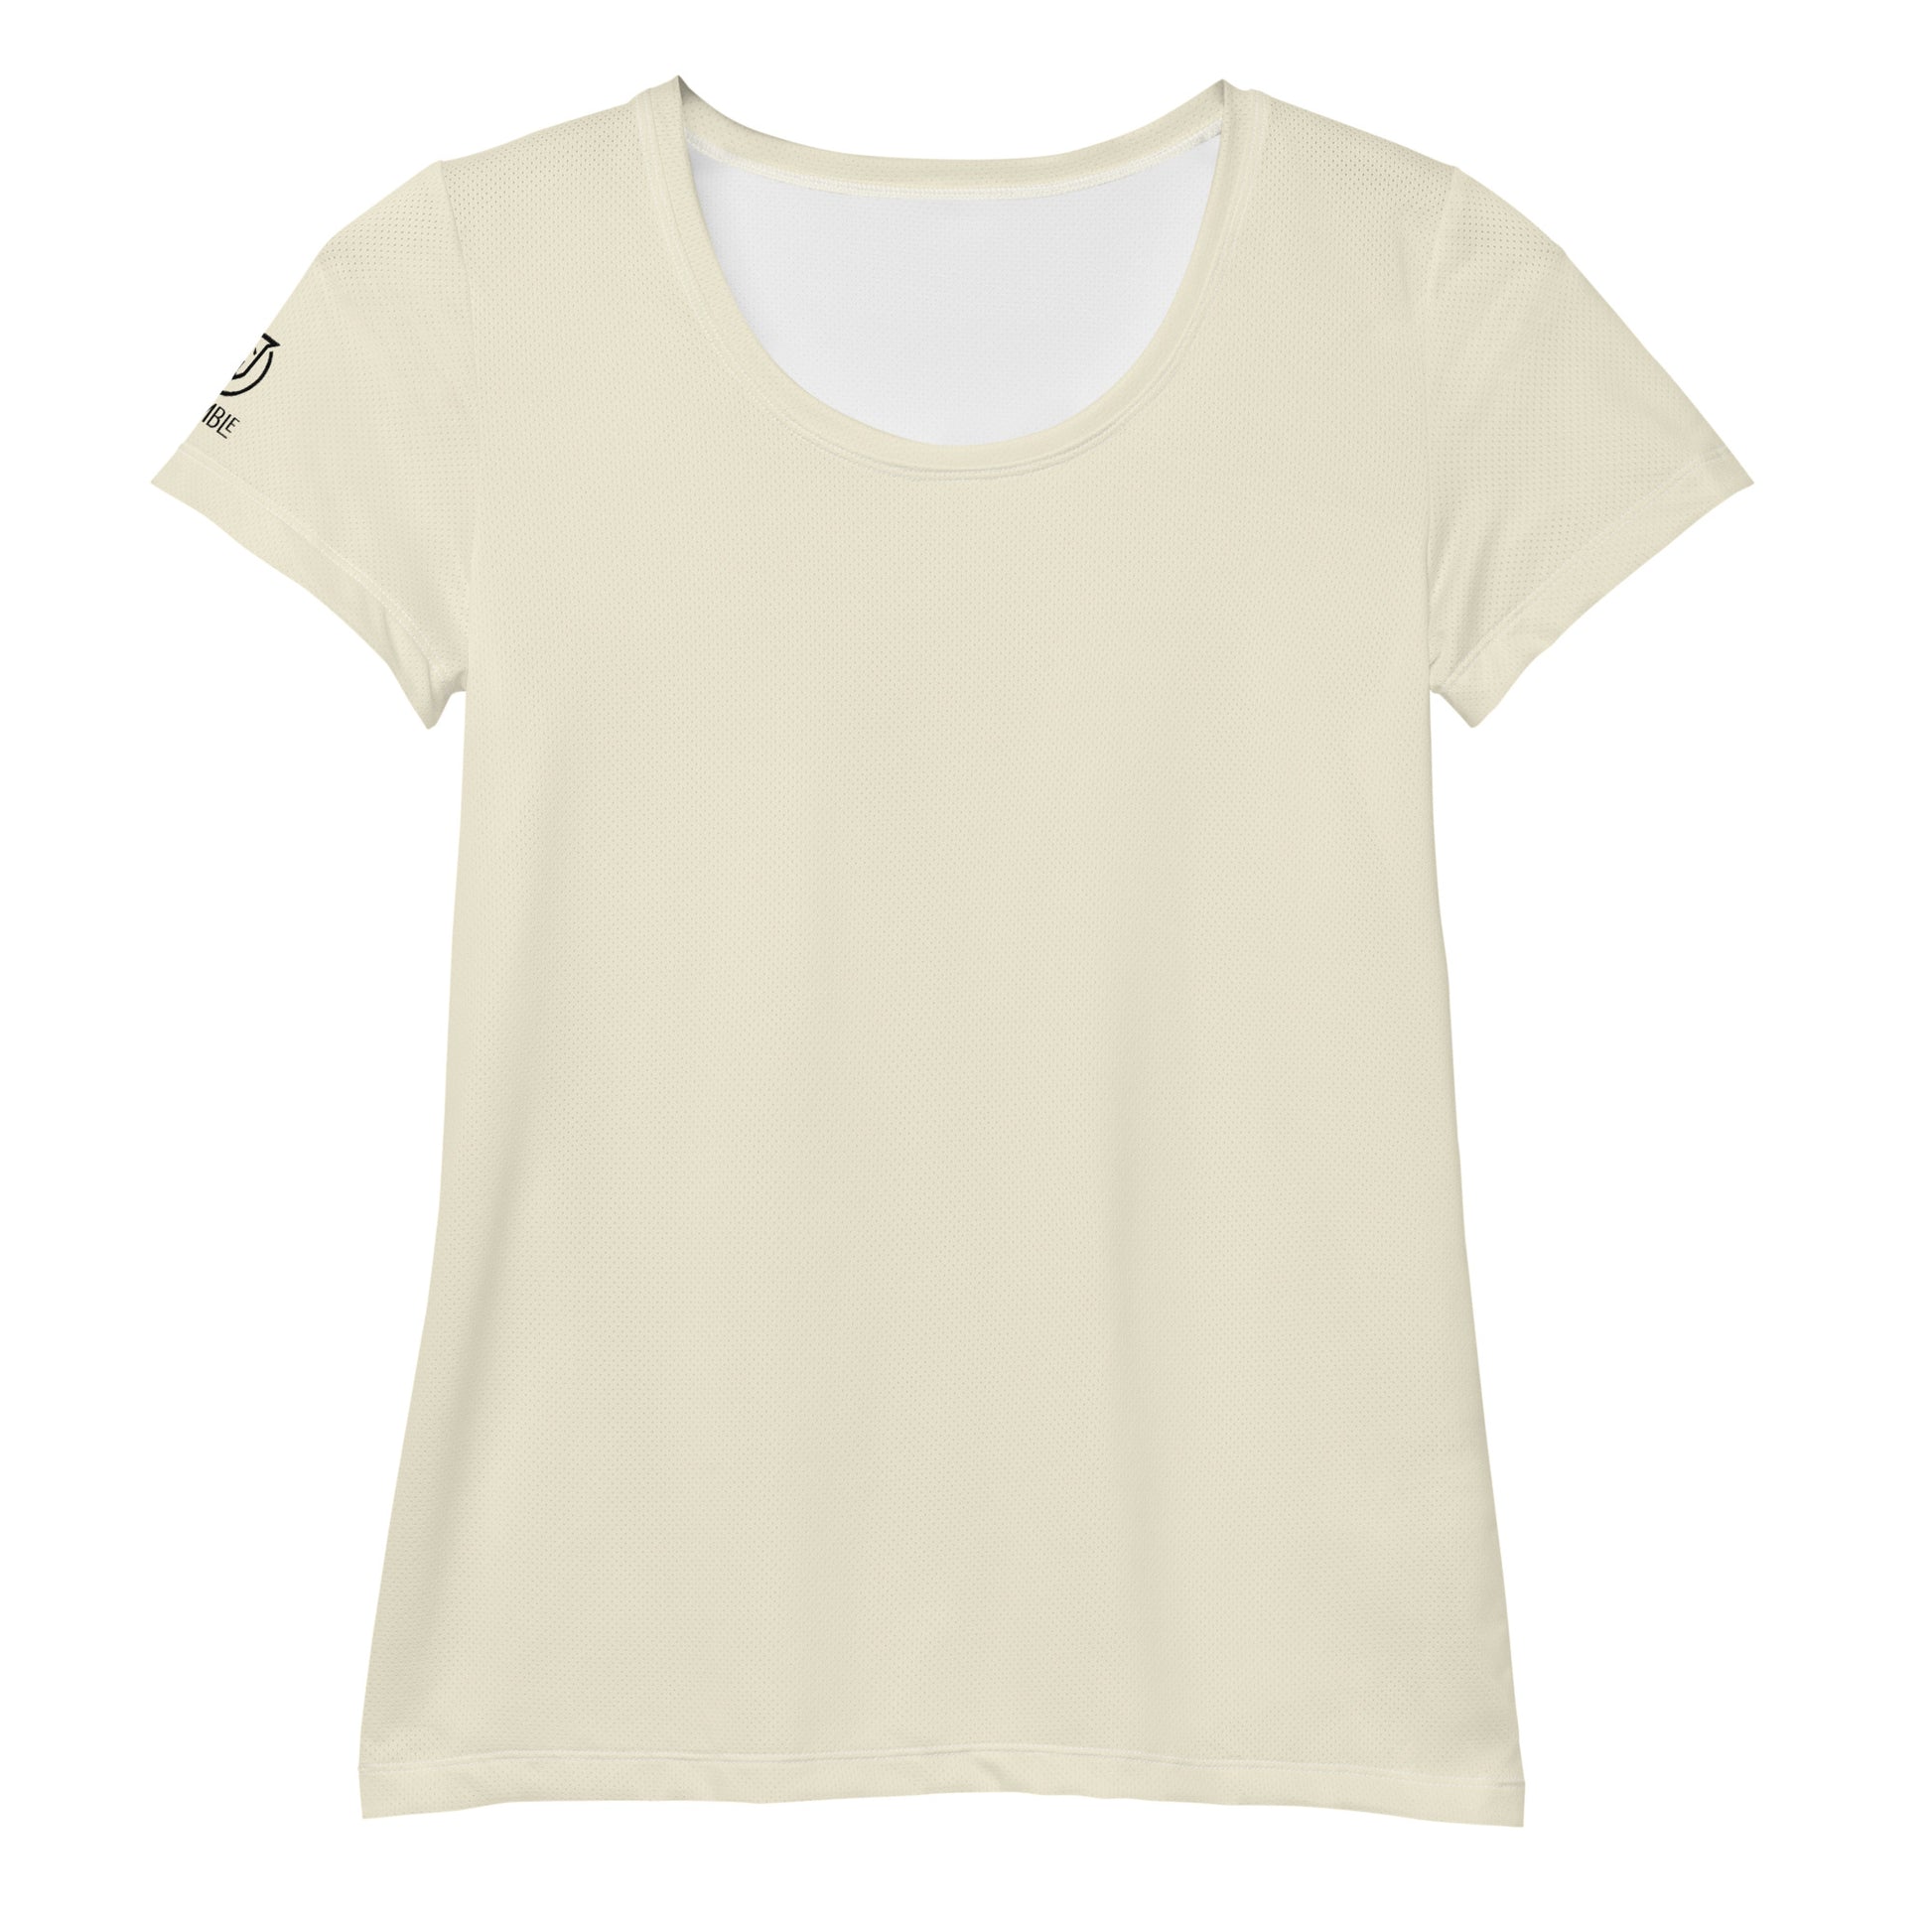 Humble Sportswear, women’s color match shirts, moisture resistant shirts, mesh athletic shirts